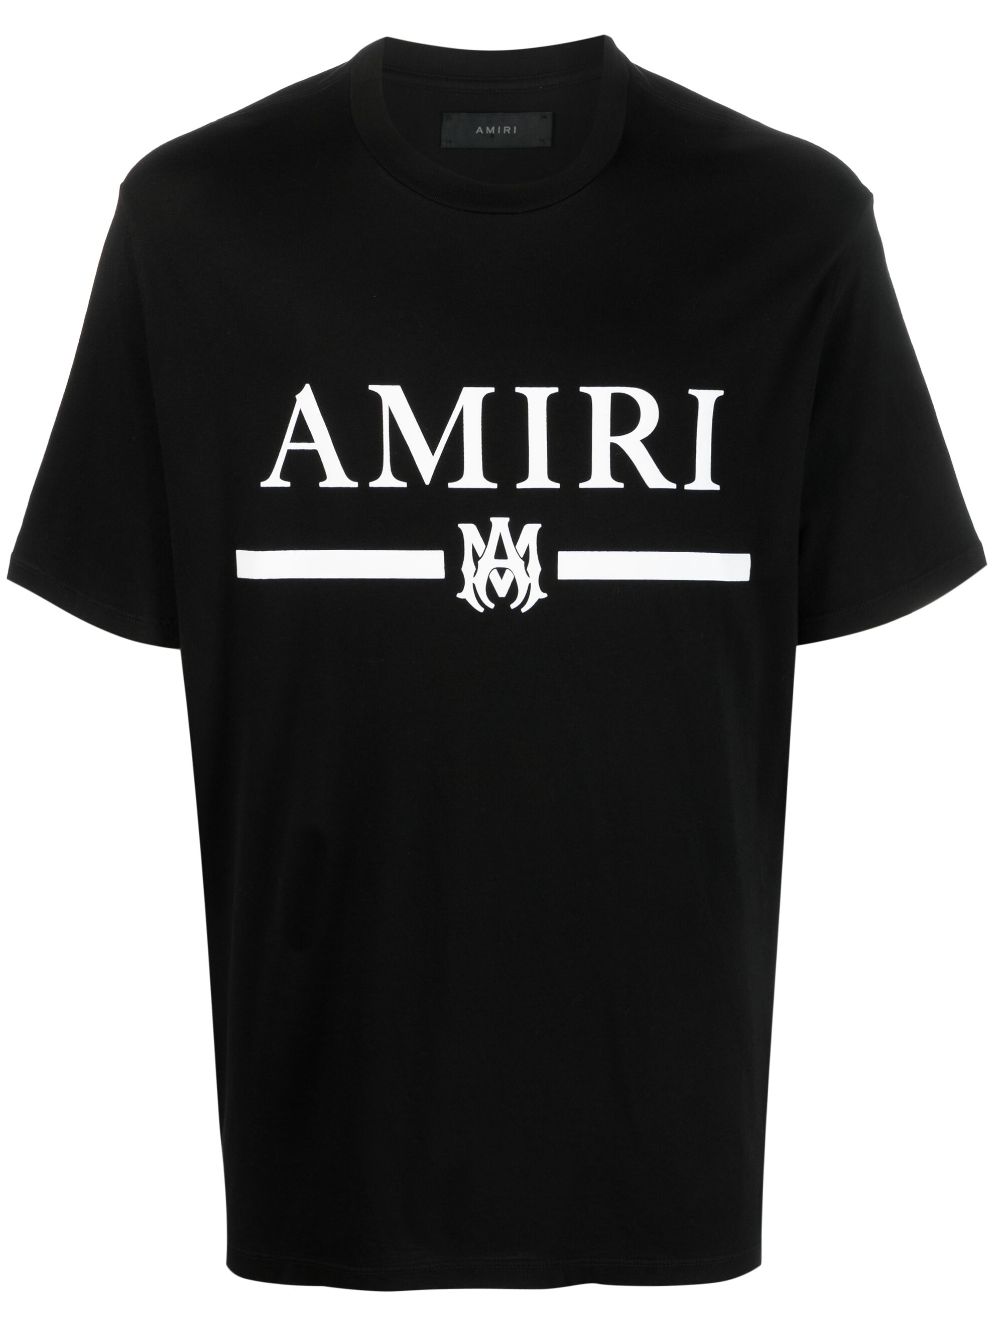 Luxury T-shirt for men - Amiri black T-shirt